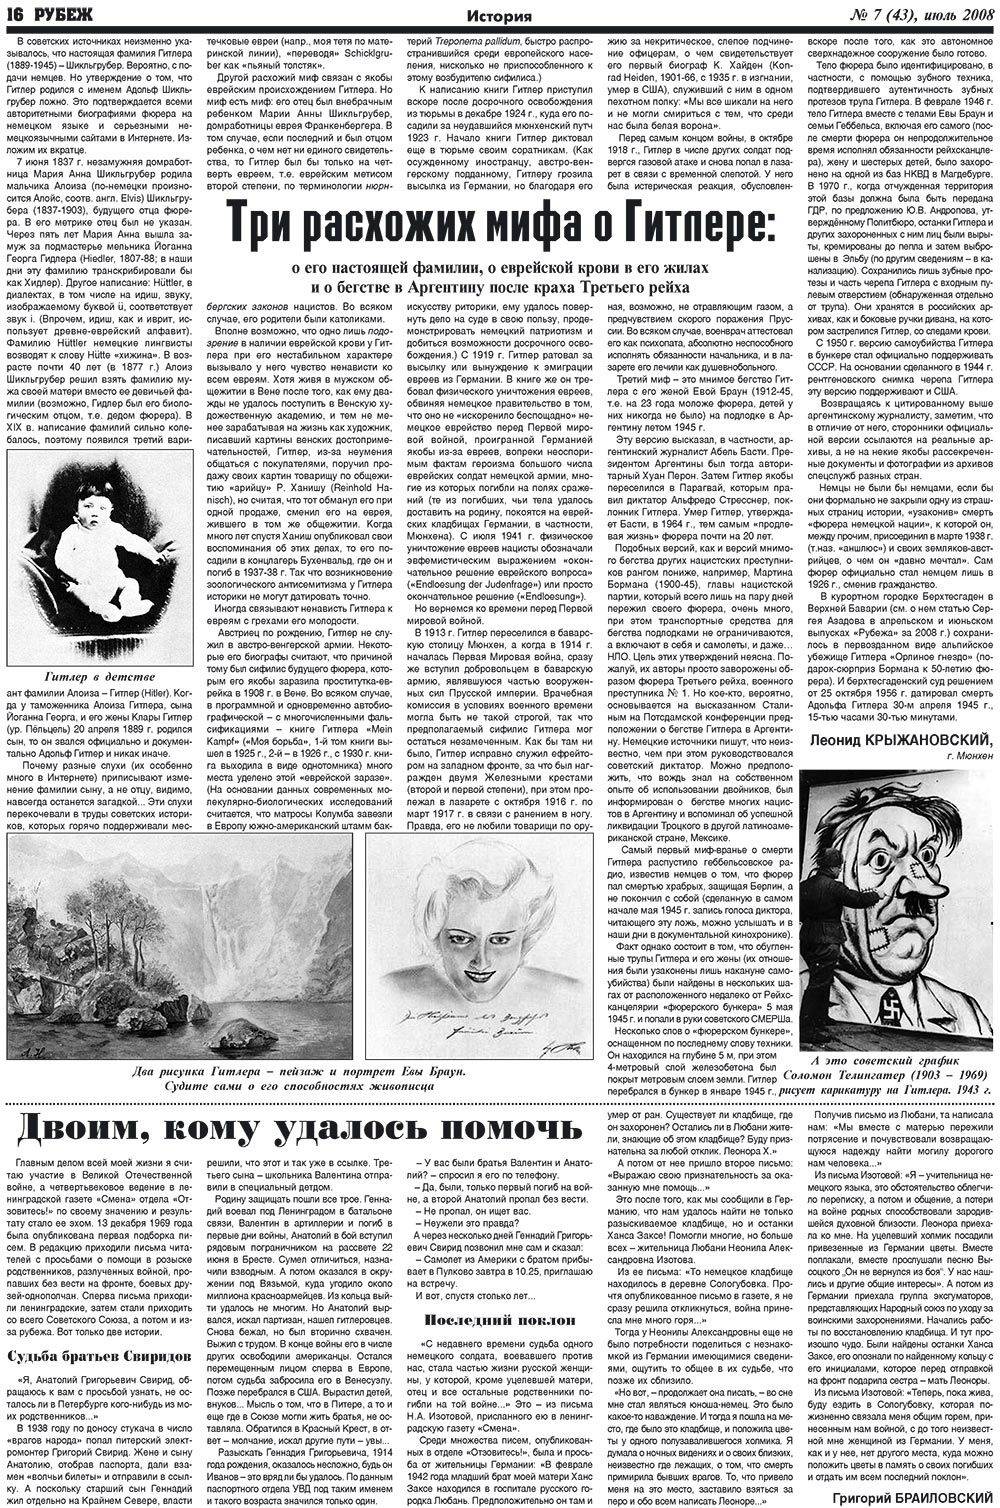 Рубеж, газета. 2008 №7 стр.16